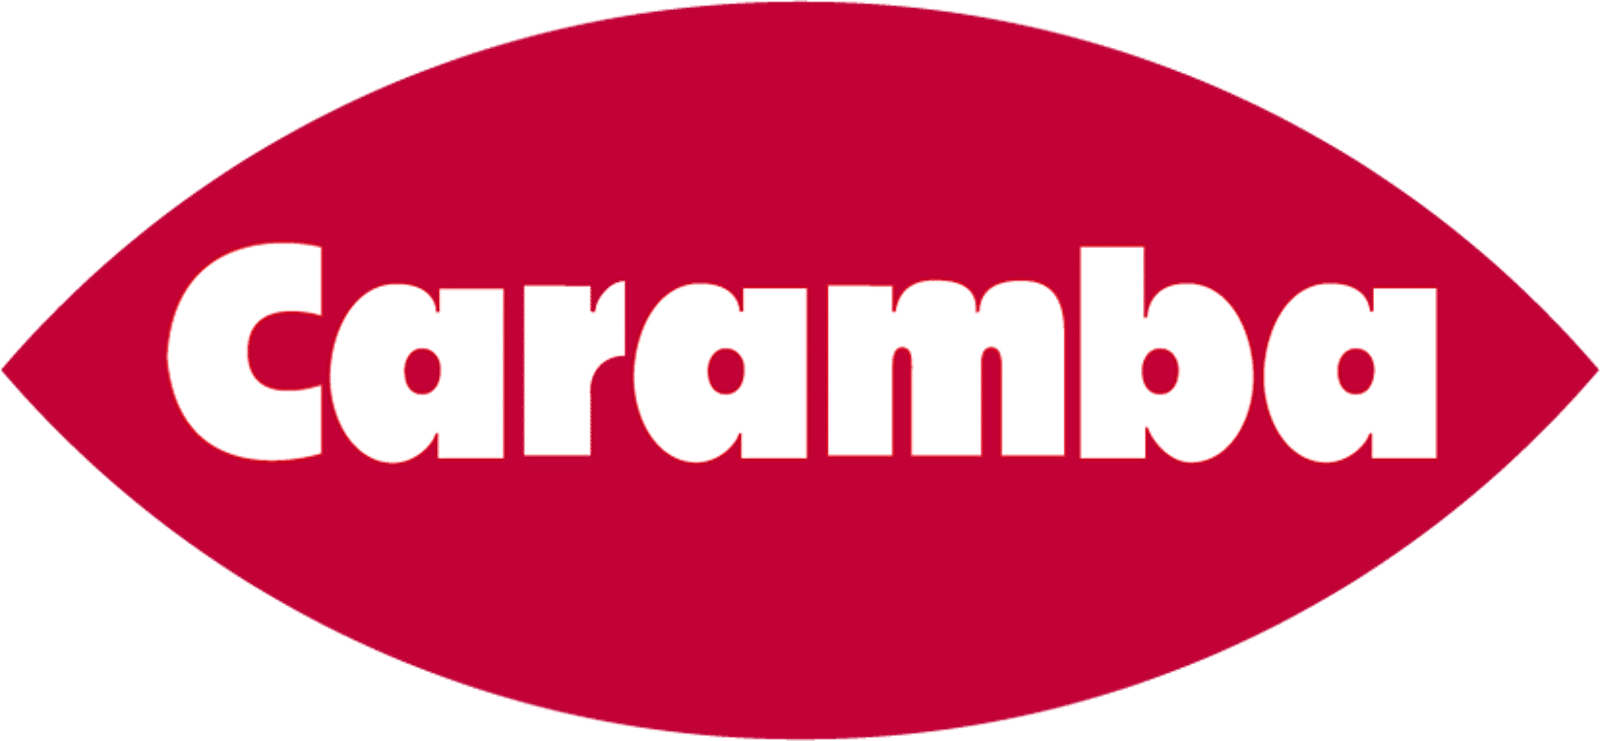 Caramba Online Shop